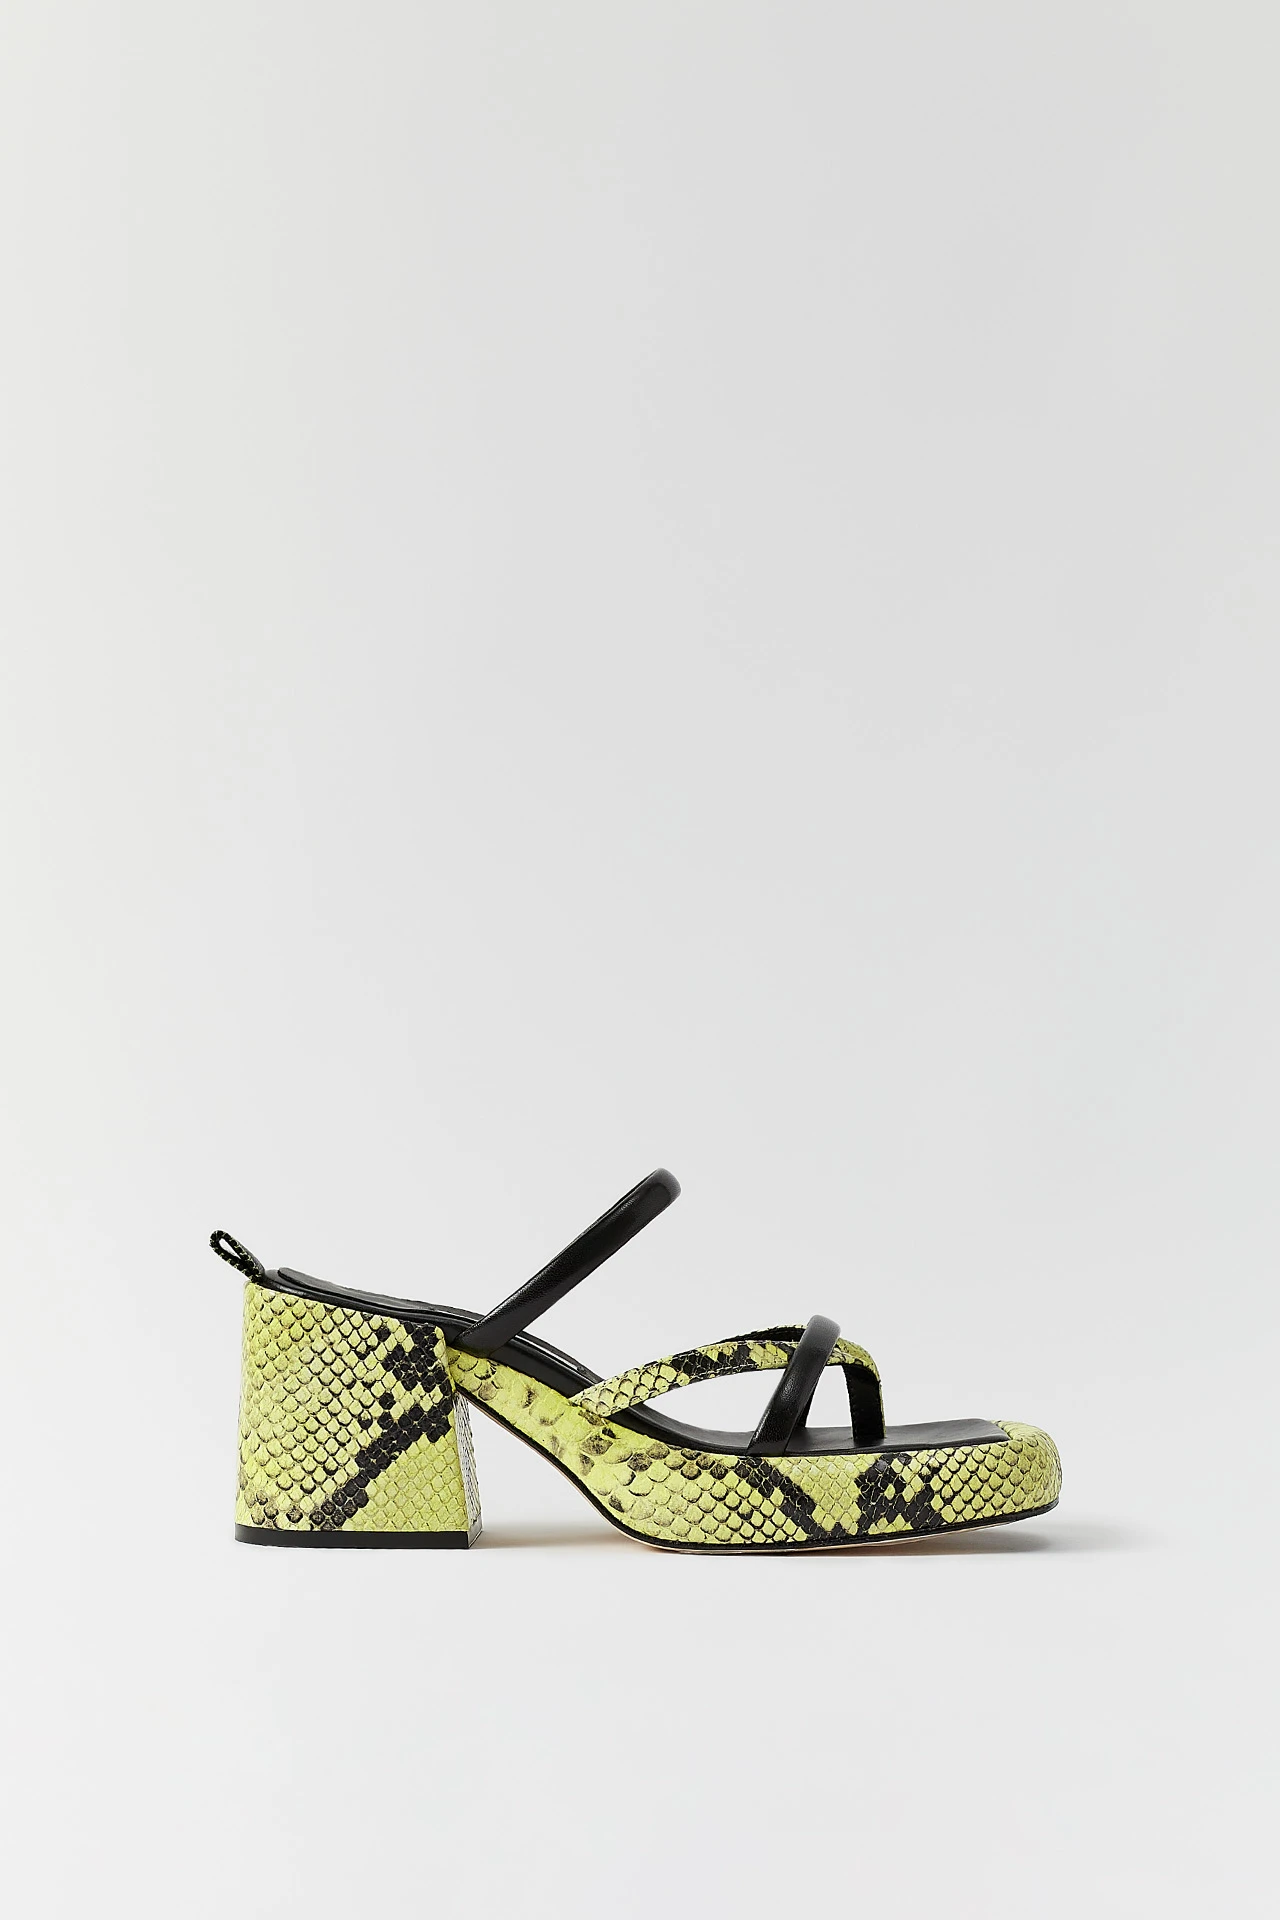 Miista-delphine-yellow-sandals-01